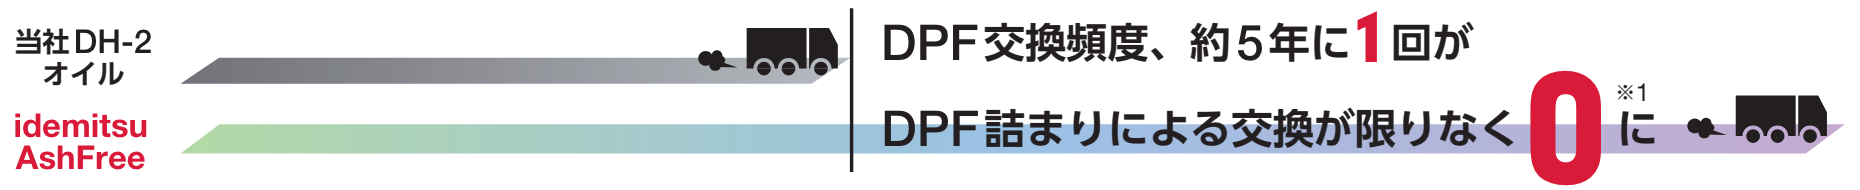 DPFを超寿命化